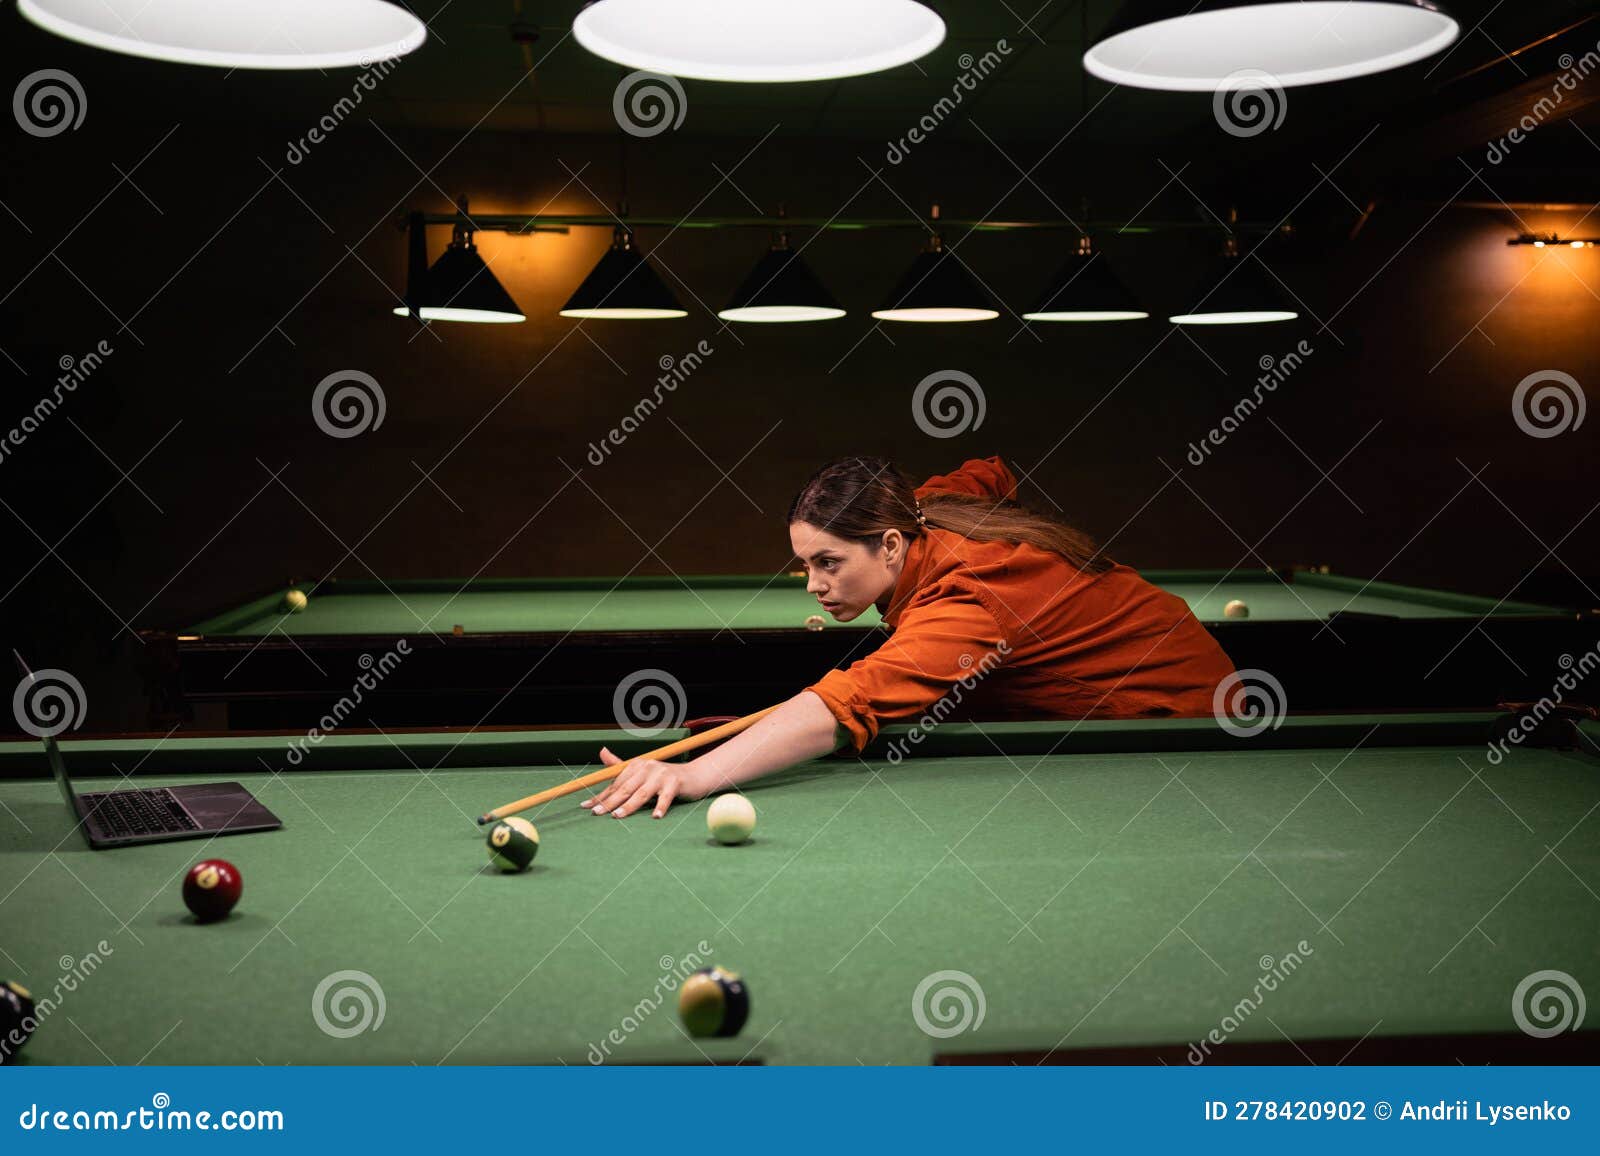 Billiard Game Online Training Course, Woman Playing Billiards Watching Tutorial Using Laptop Stock Photo